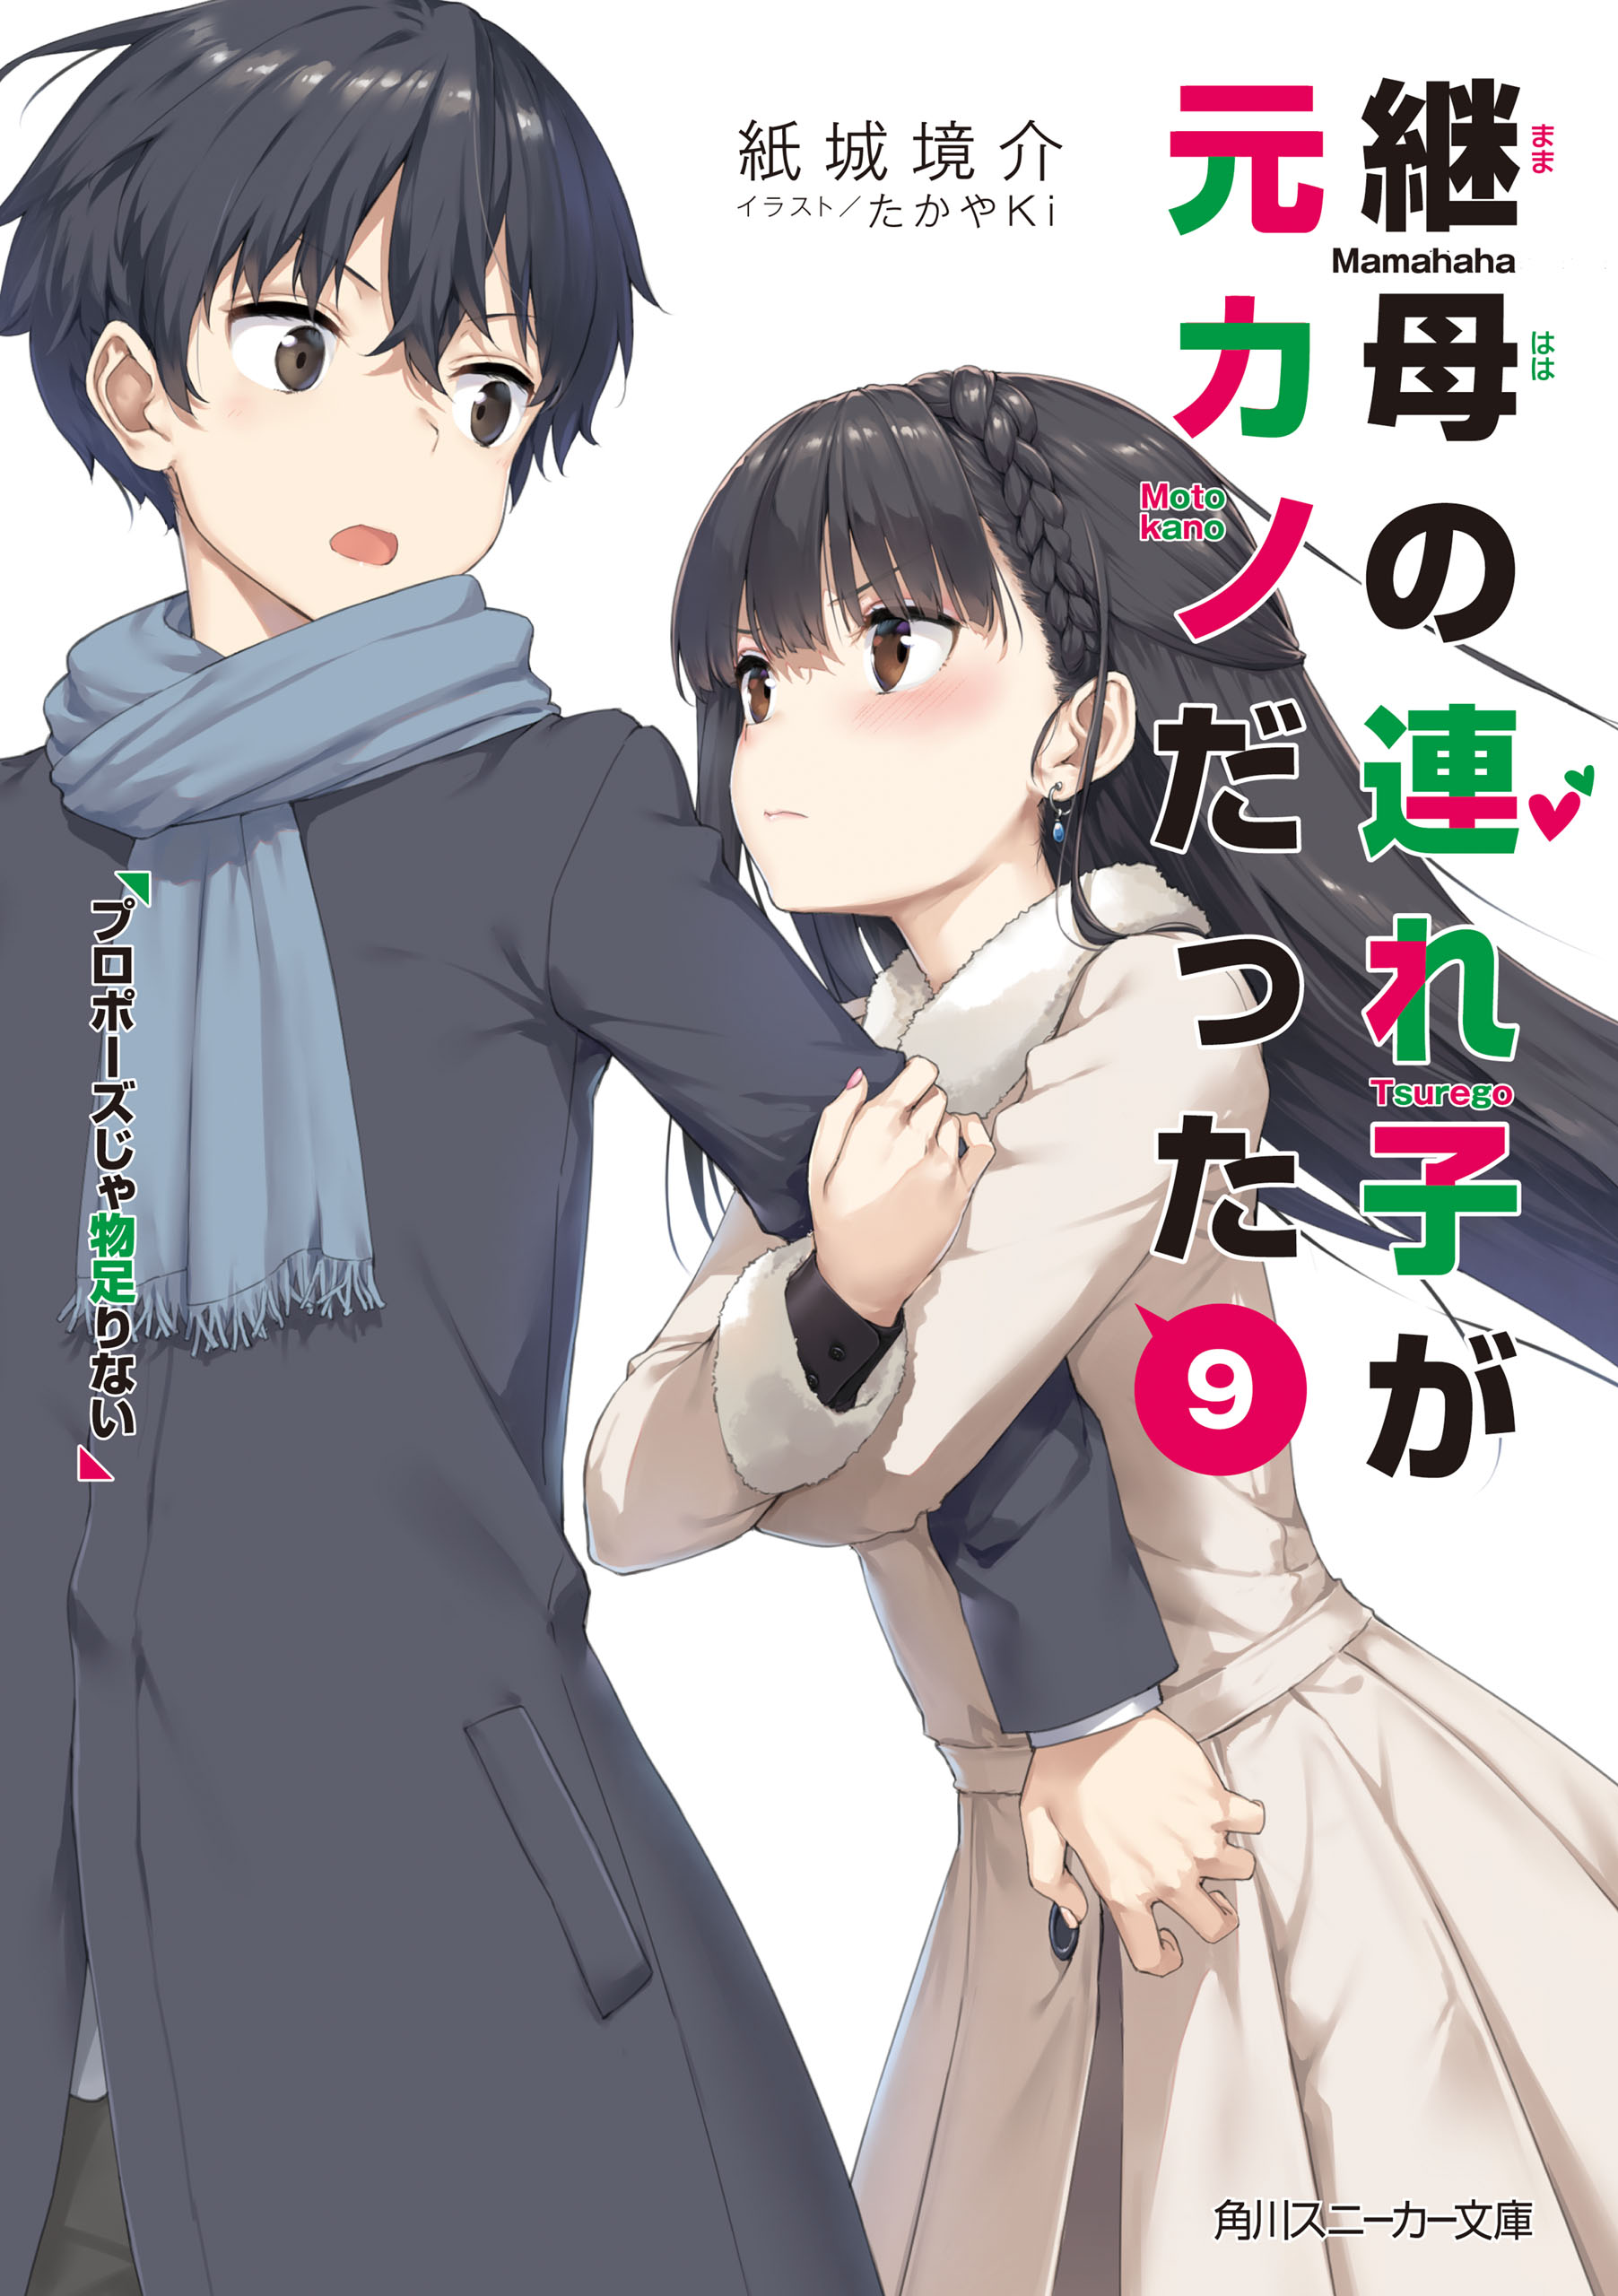 Download] Pdf/epubs for all volumes of Mamahaha no Tsurego ga Motokano datta  Light Novel, Link in comments : r/MamahahaTsurego